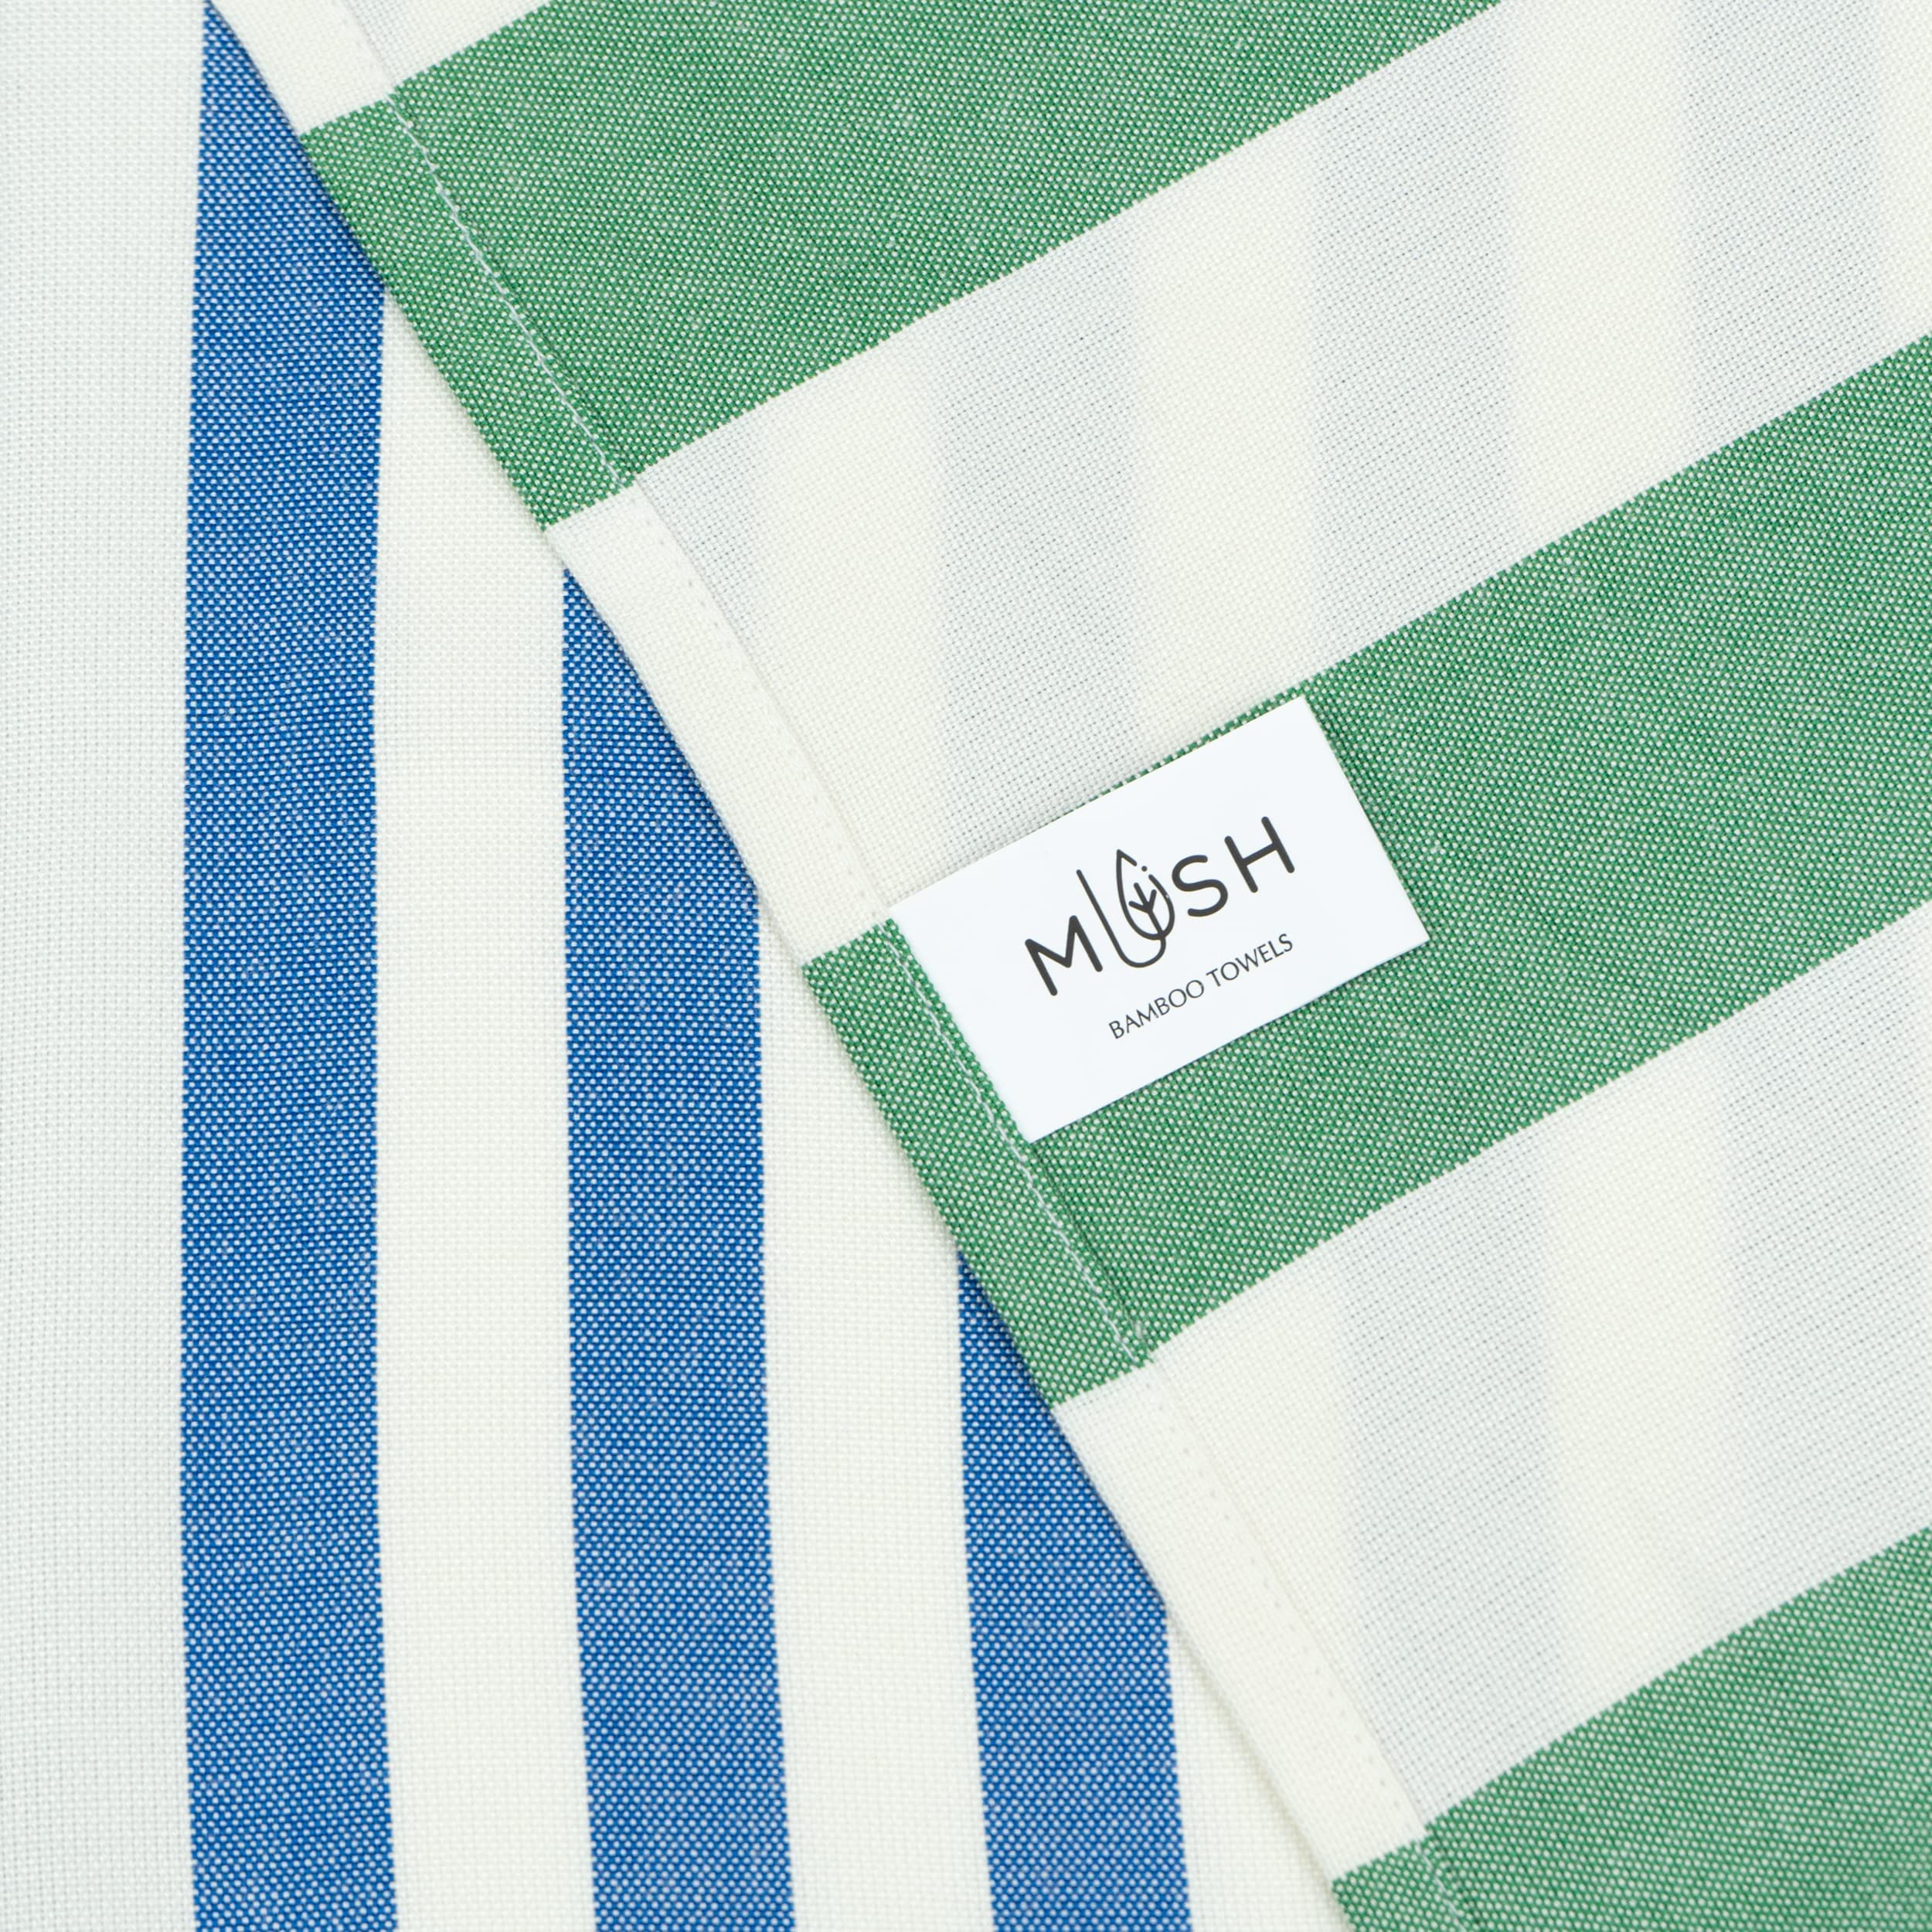 Mush Extra Large Cabana Style Turkish Towel 100% Bamboo - (90 X 160 Cms) - Ideal For Beach, Bath, Pool Etc (Blue & Green, 1, 250 Gsm)